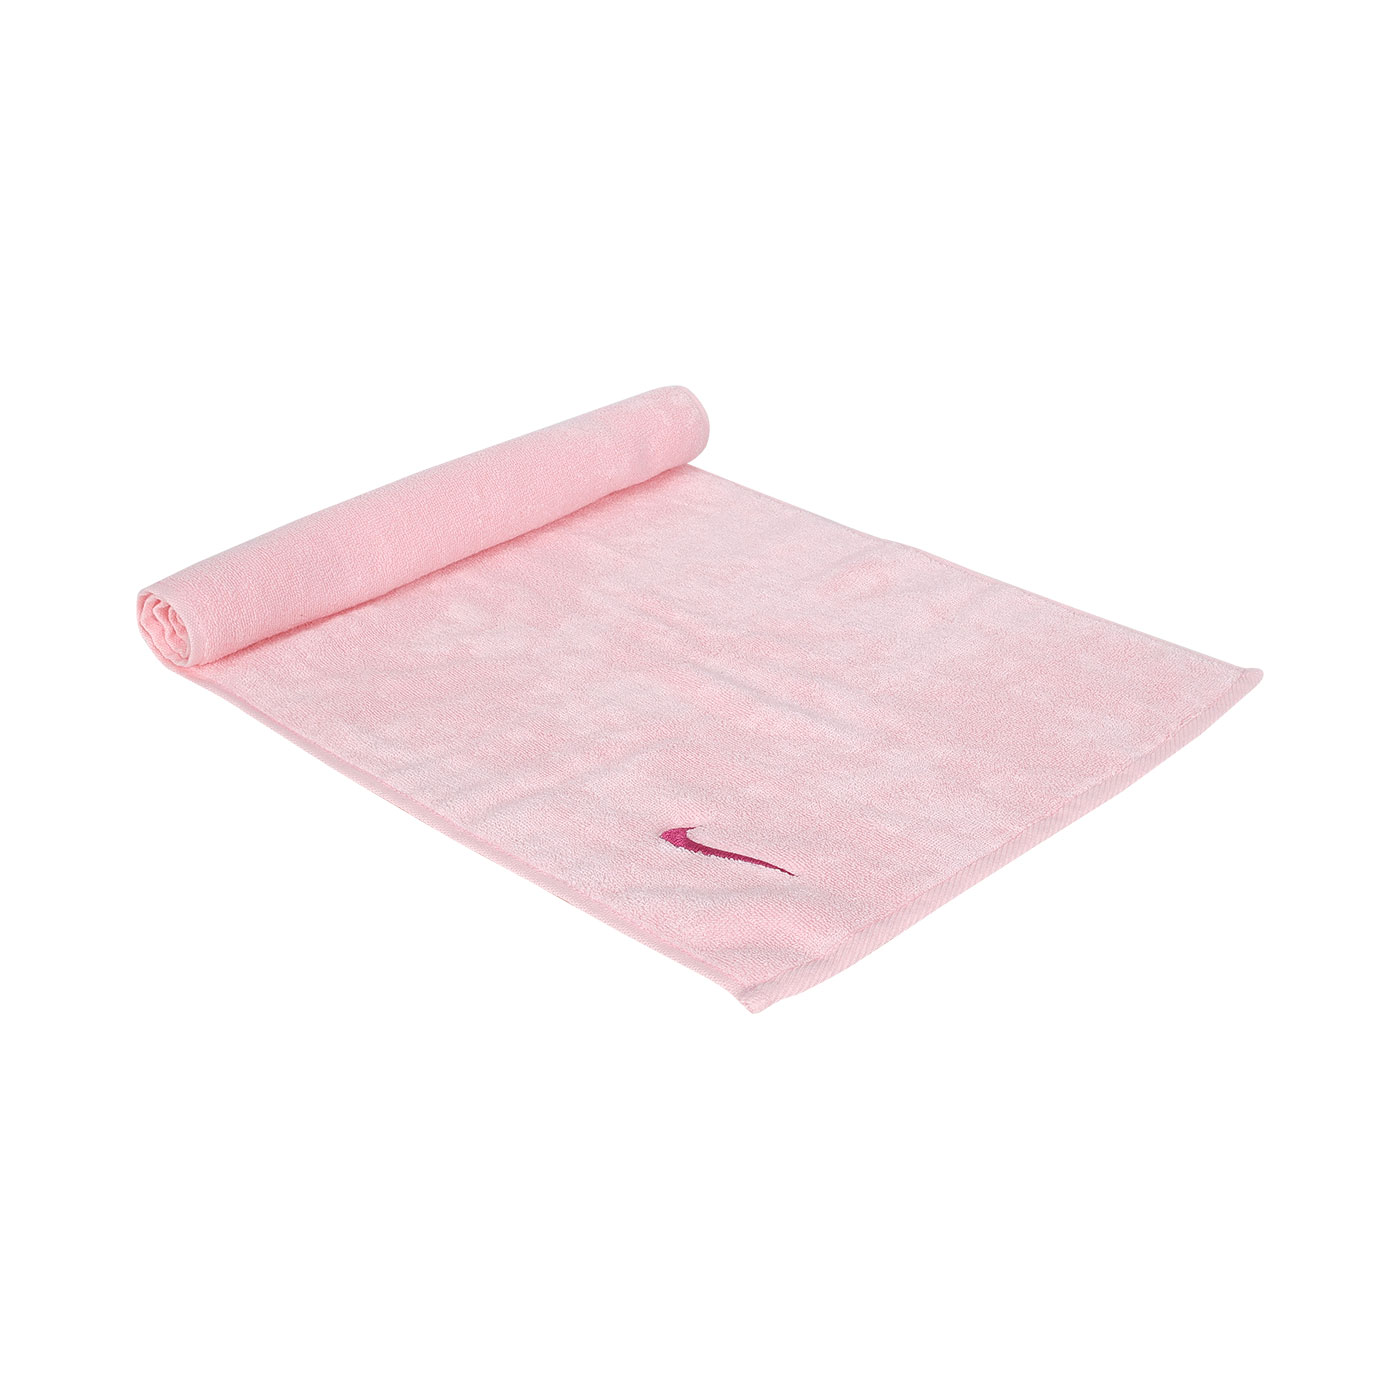 NIKE SOLID CORE 毛巾(80x35cm)  N1001541606NS - 淺粉桃紅